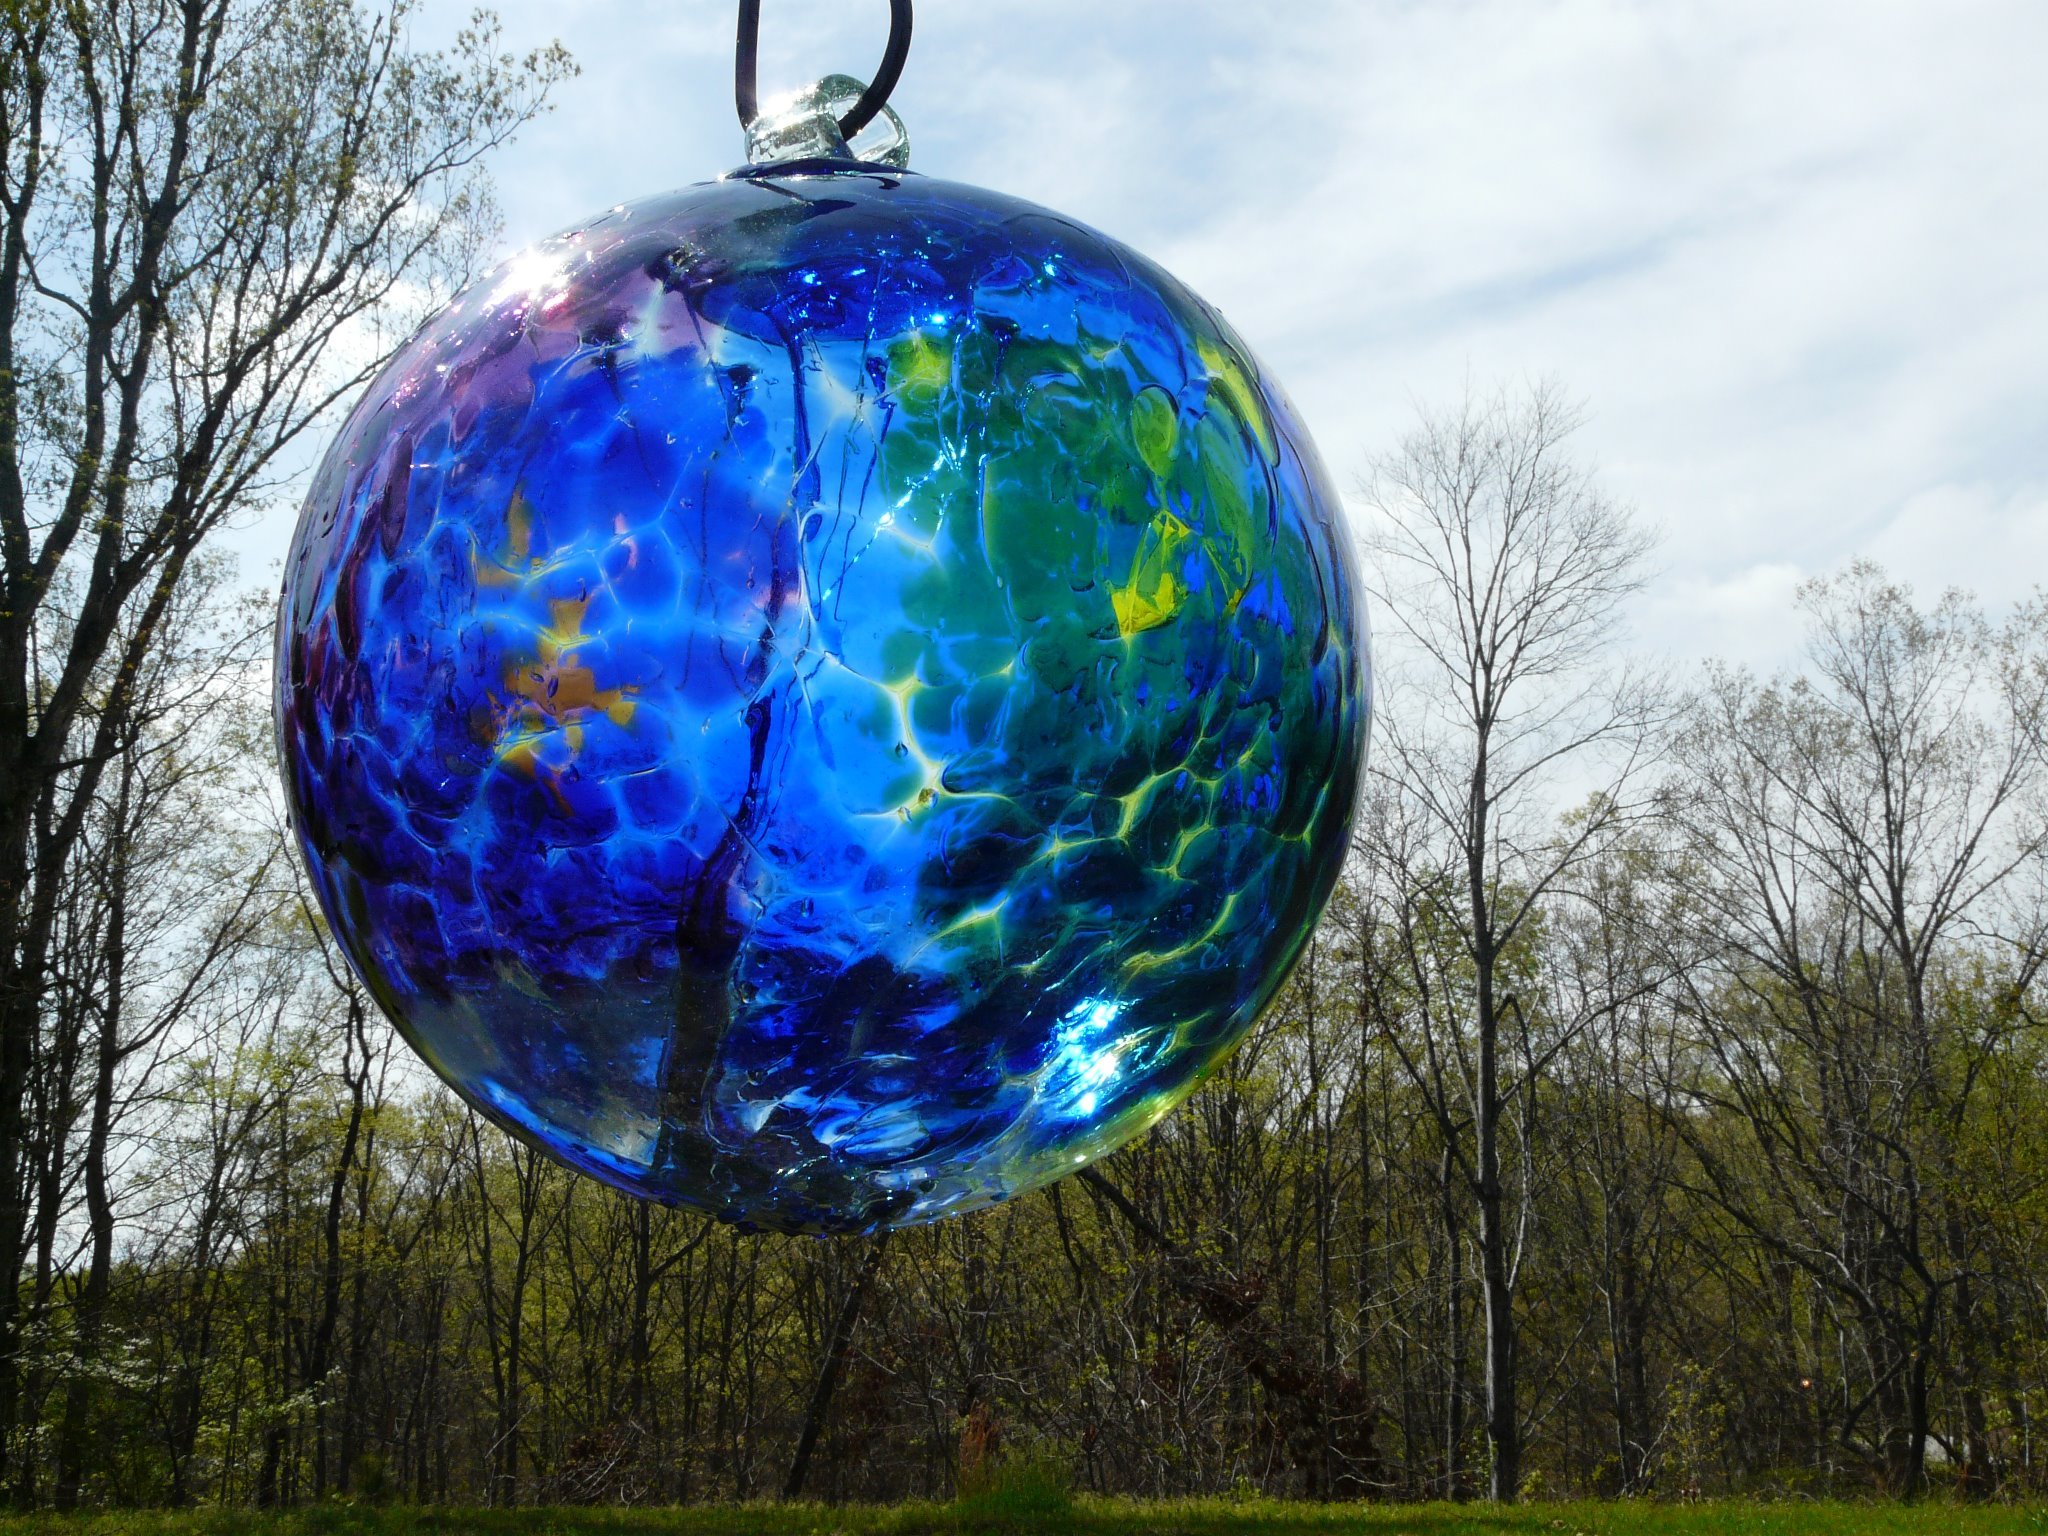 Decorative glass balls